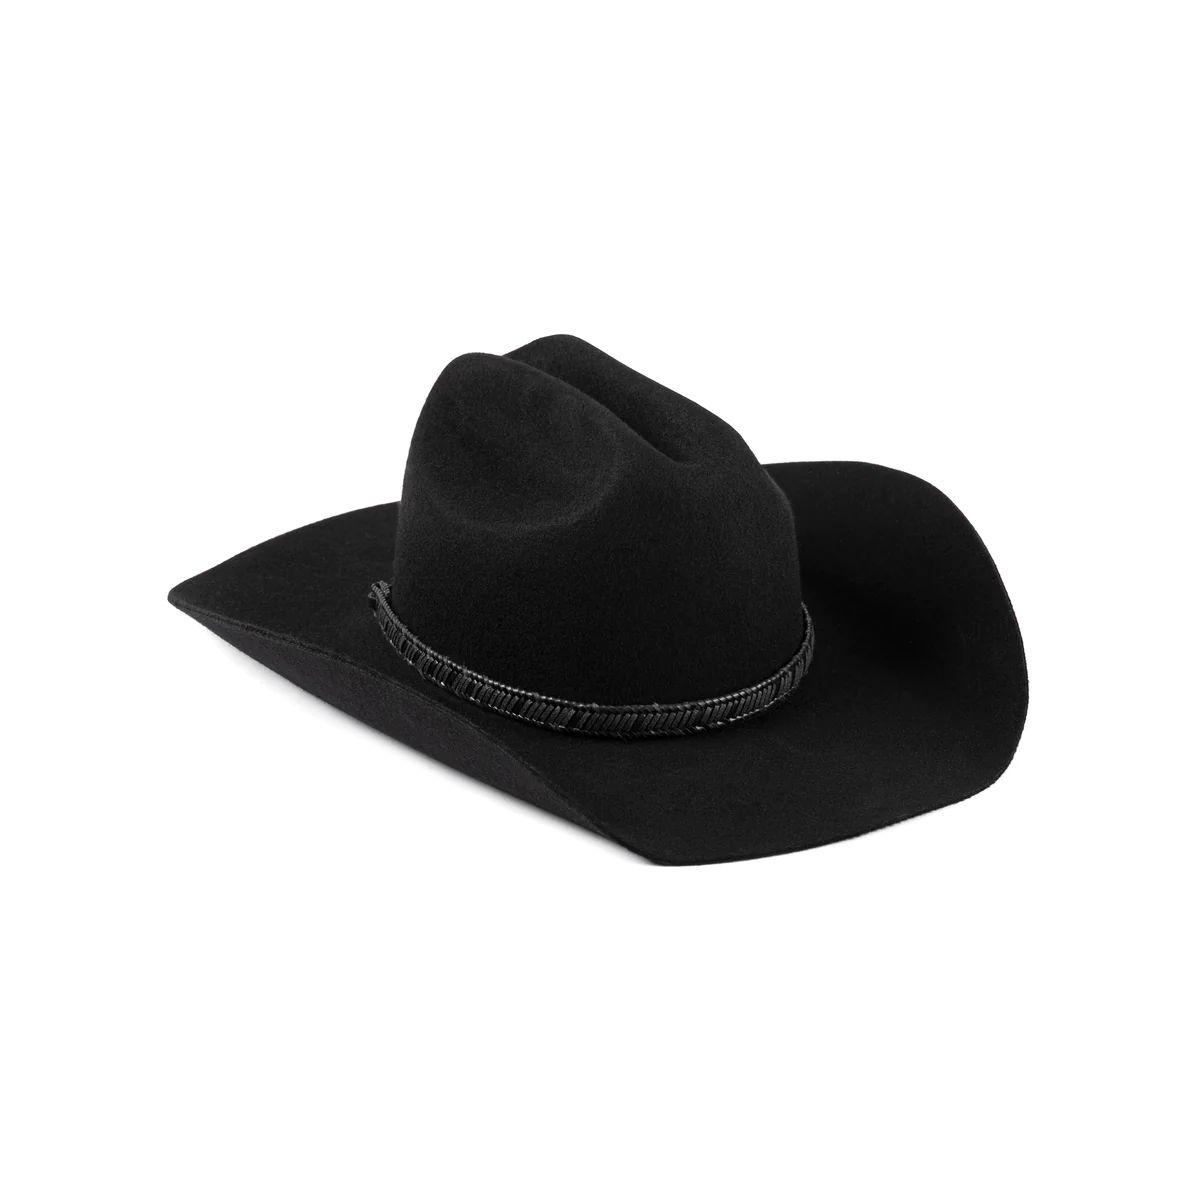 The Ridge - Wool Felt Cowboy Hat in Black | Lack of Color US | Lack of Color